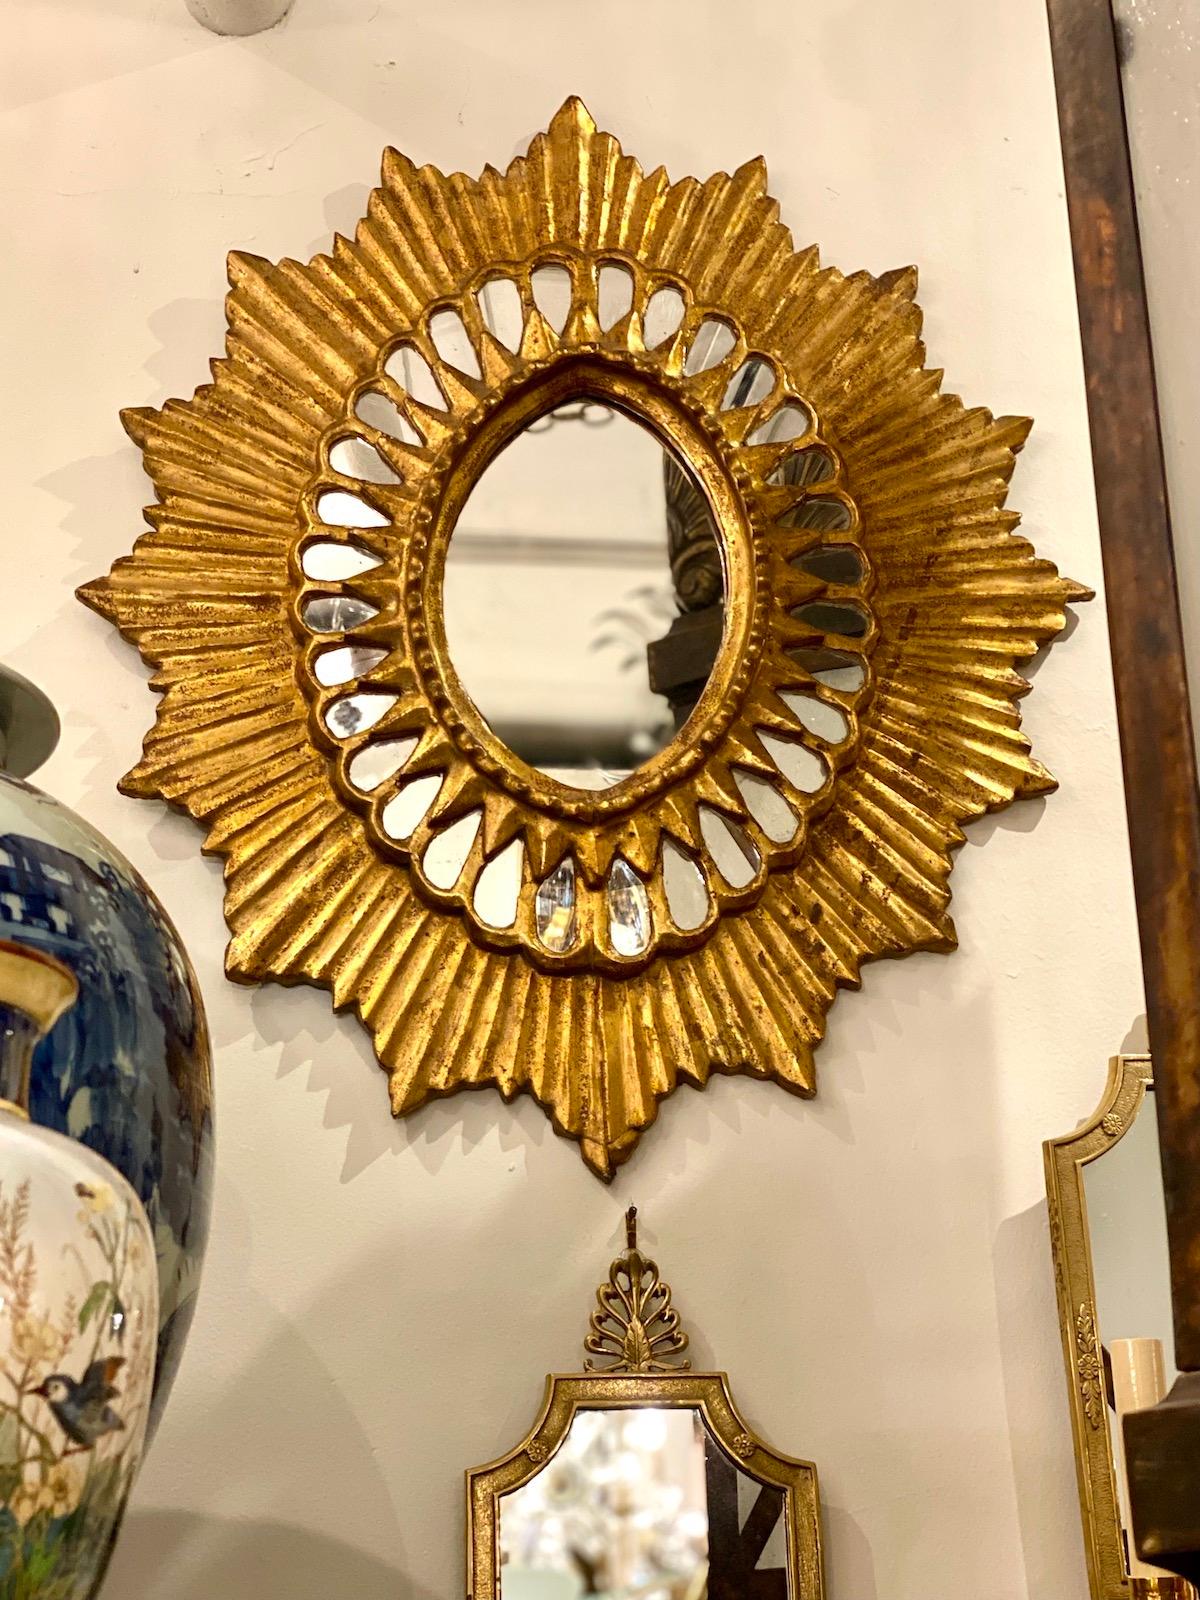 A circa 1920's Spanish gilt sunburst mirror.

Measurements:
Height: 24